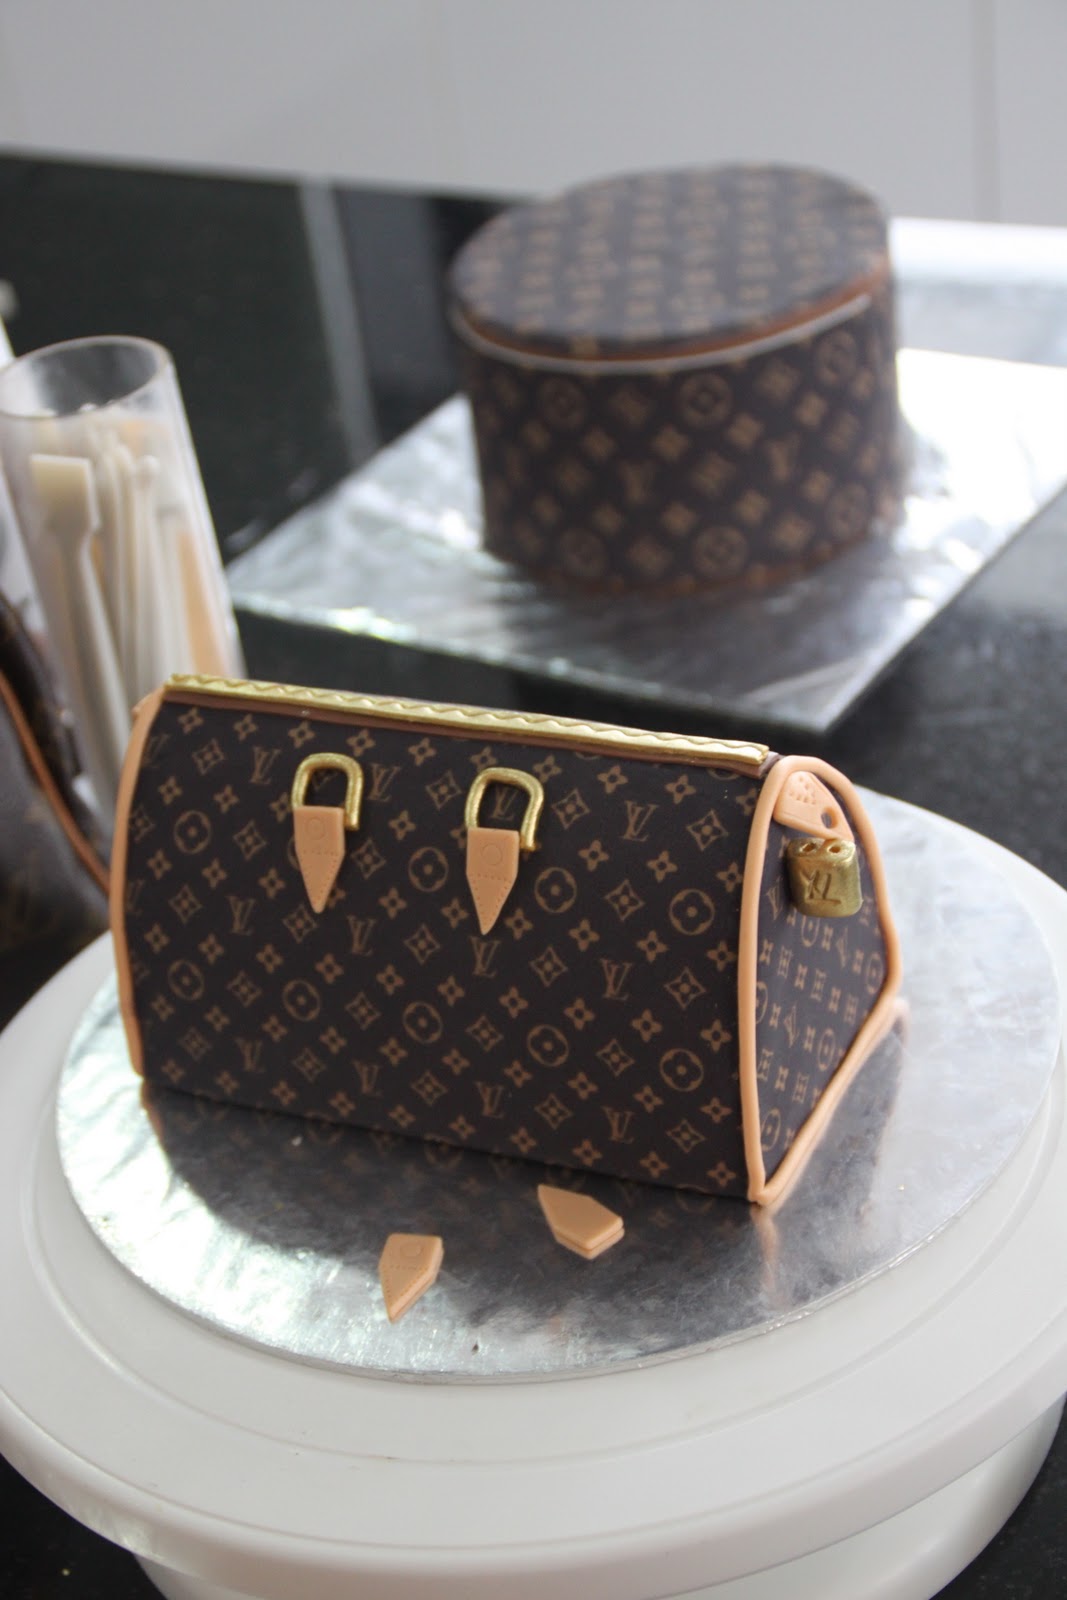 Celebrate with Cake!: Louis Vuitton Bag Cake